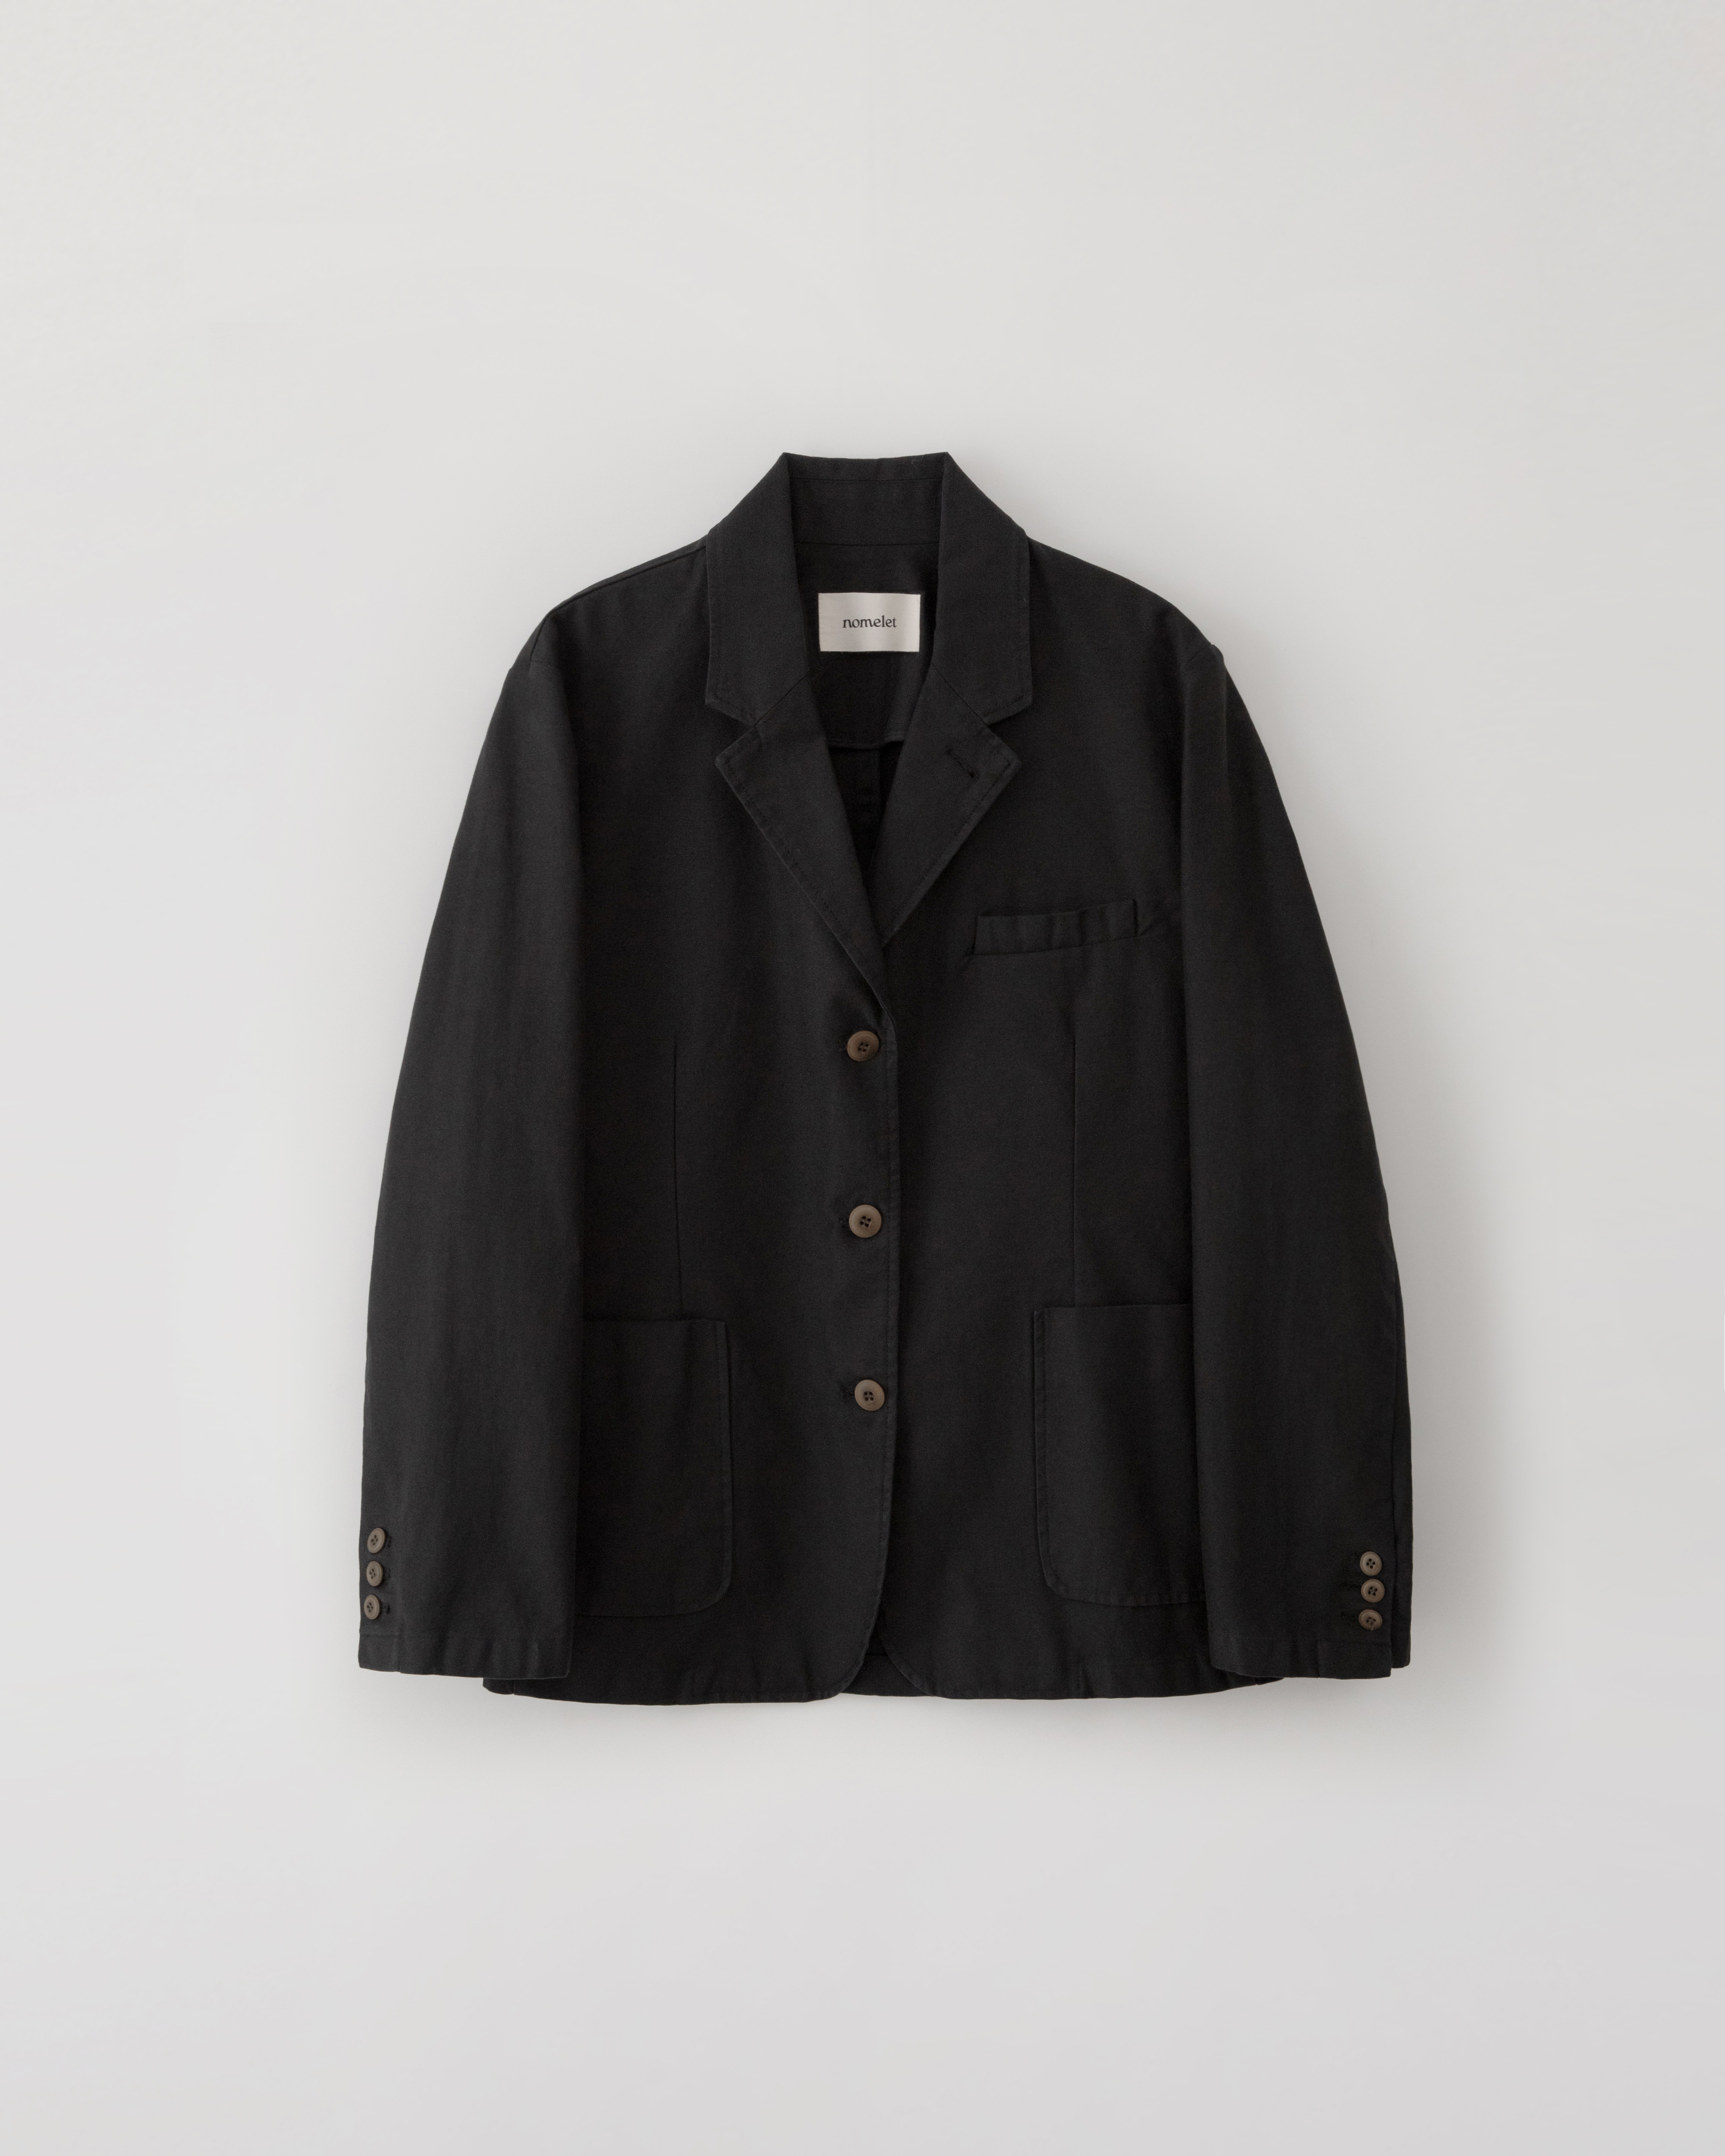 Sienna garments cotton jacket - washed black